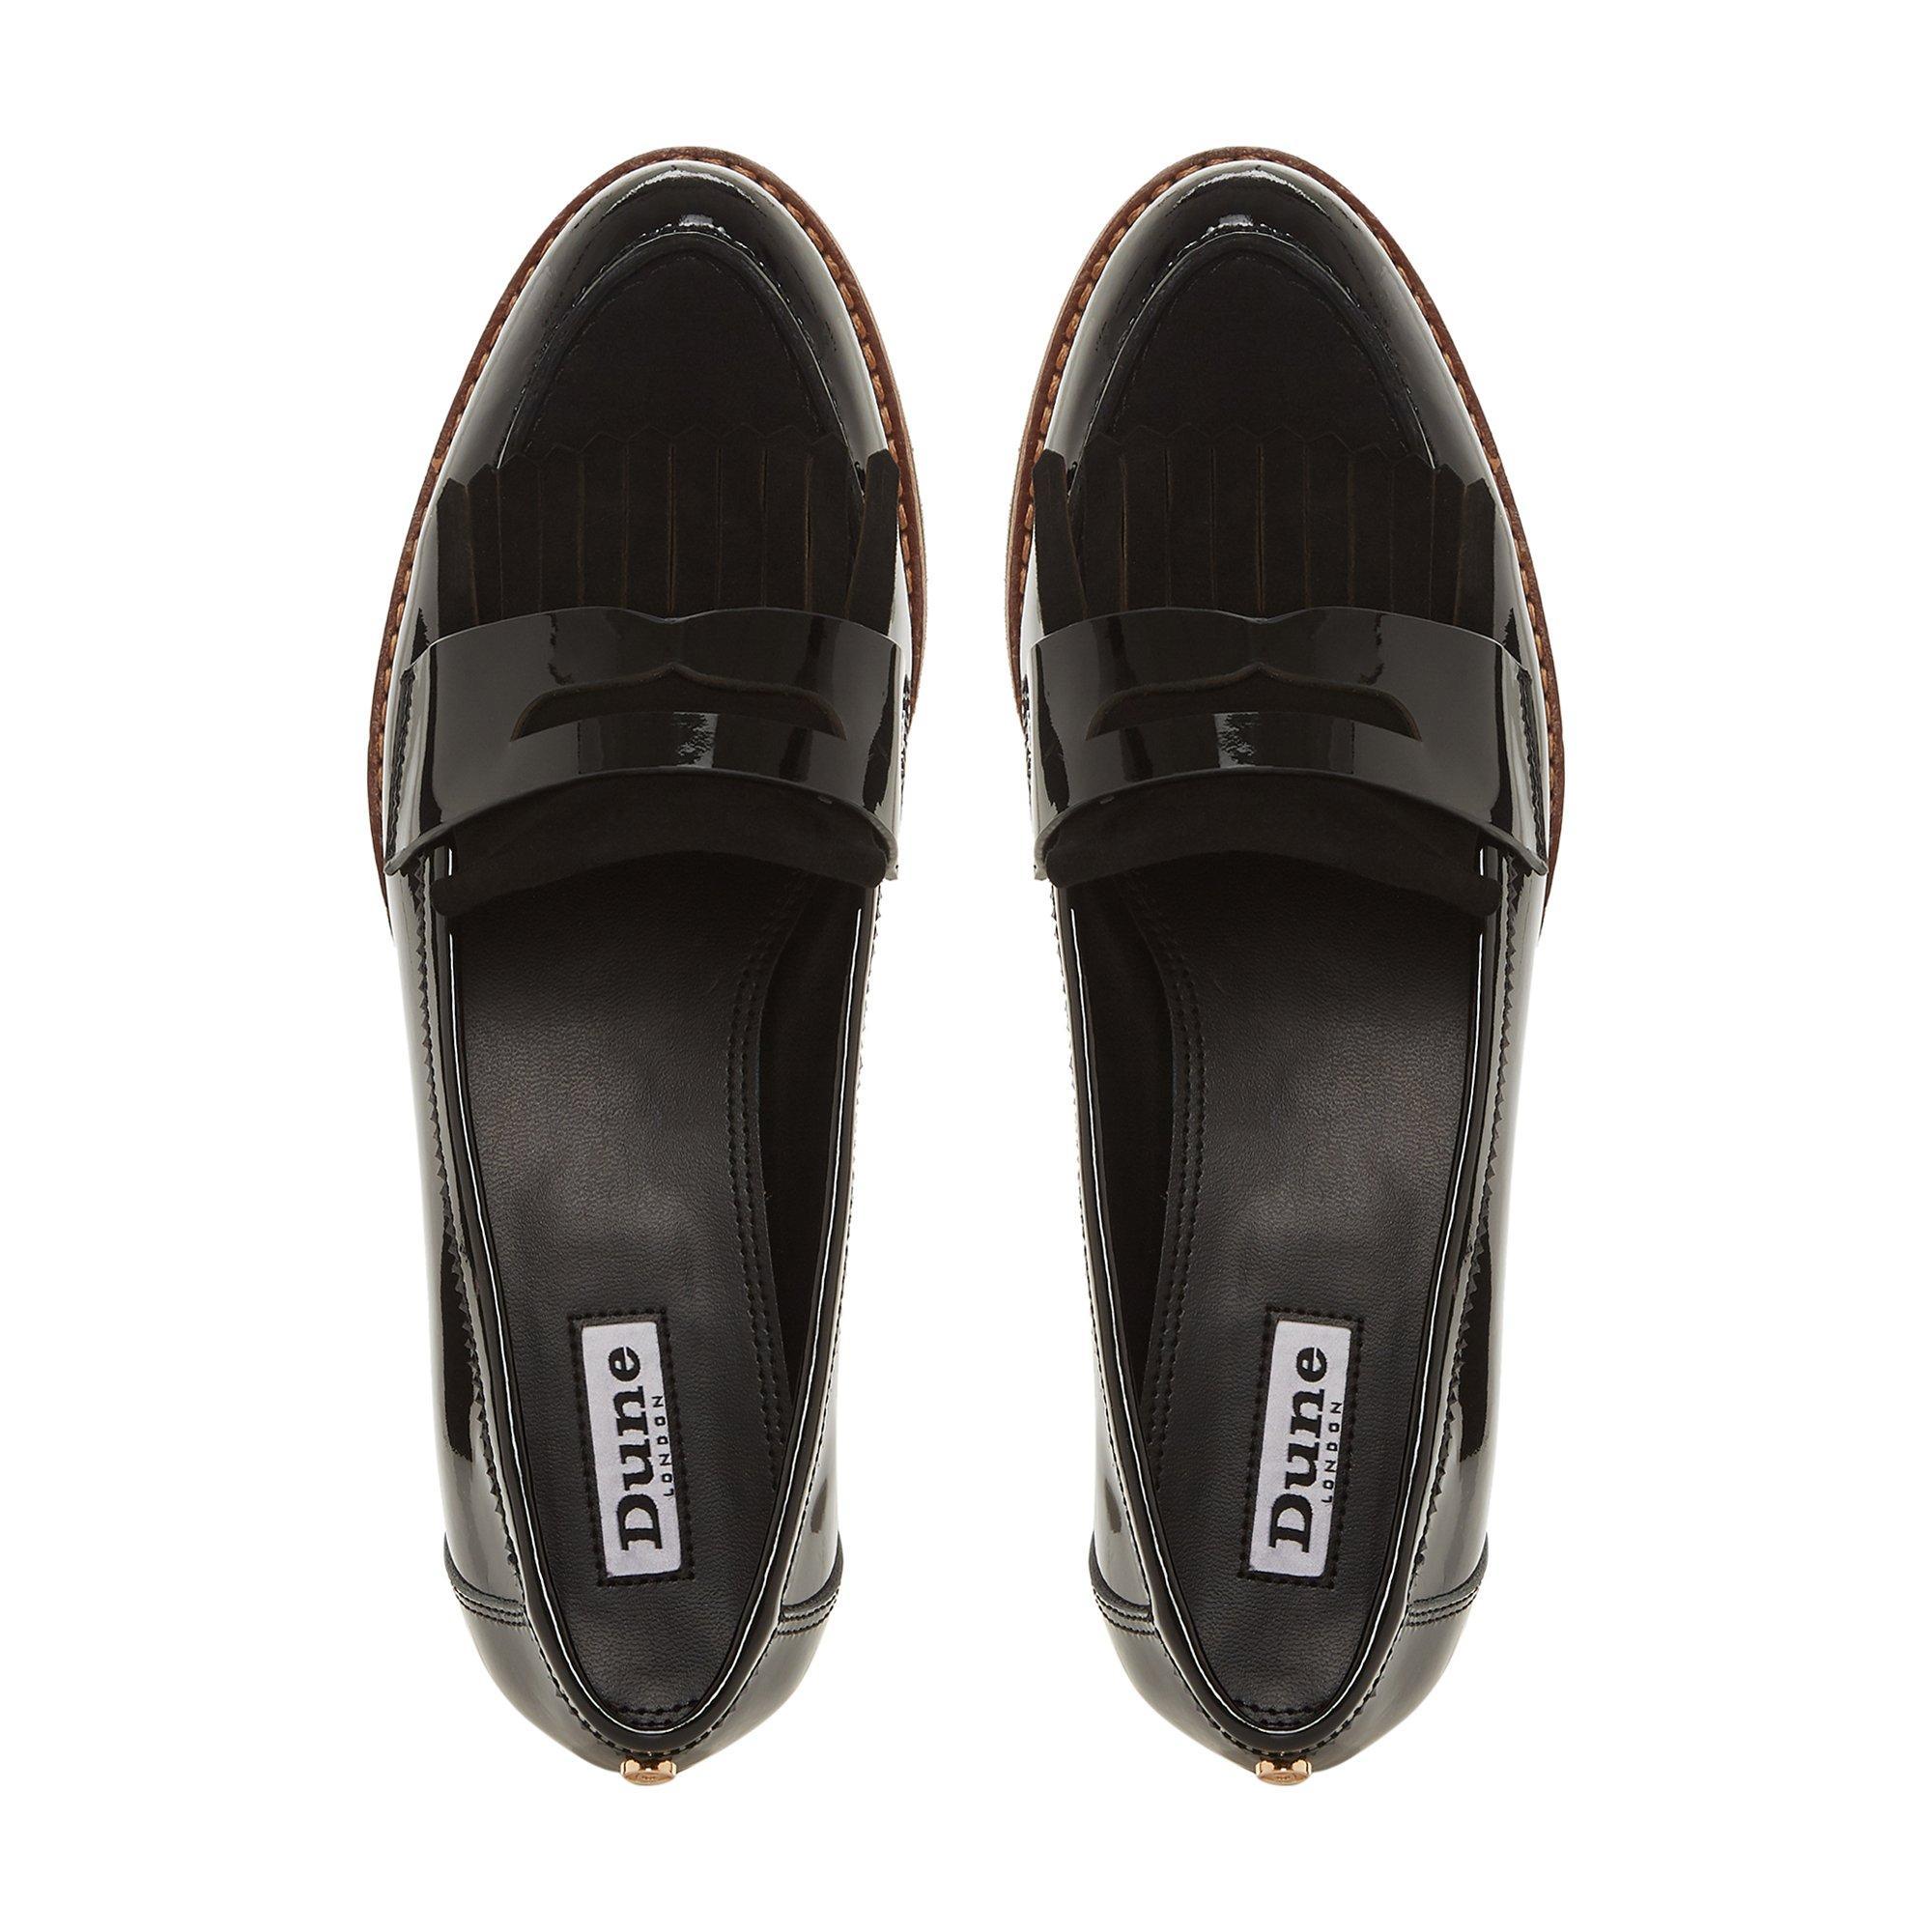 Gracella Flatform Leather Loafers 